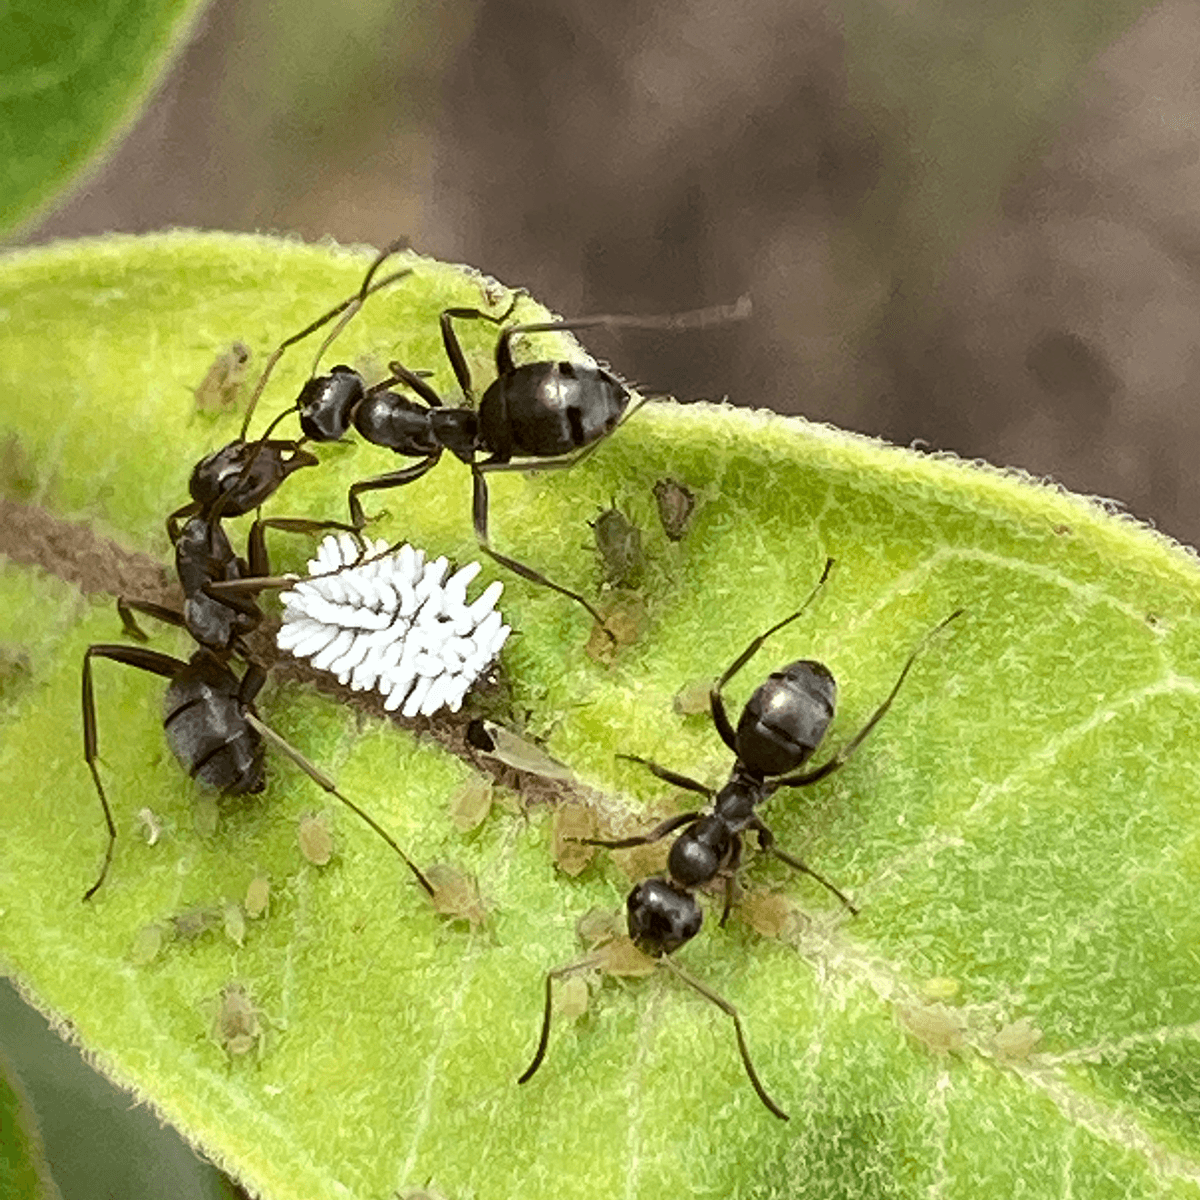 Ants and aphid larvae on a leaf